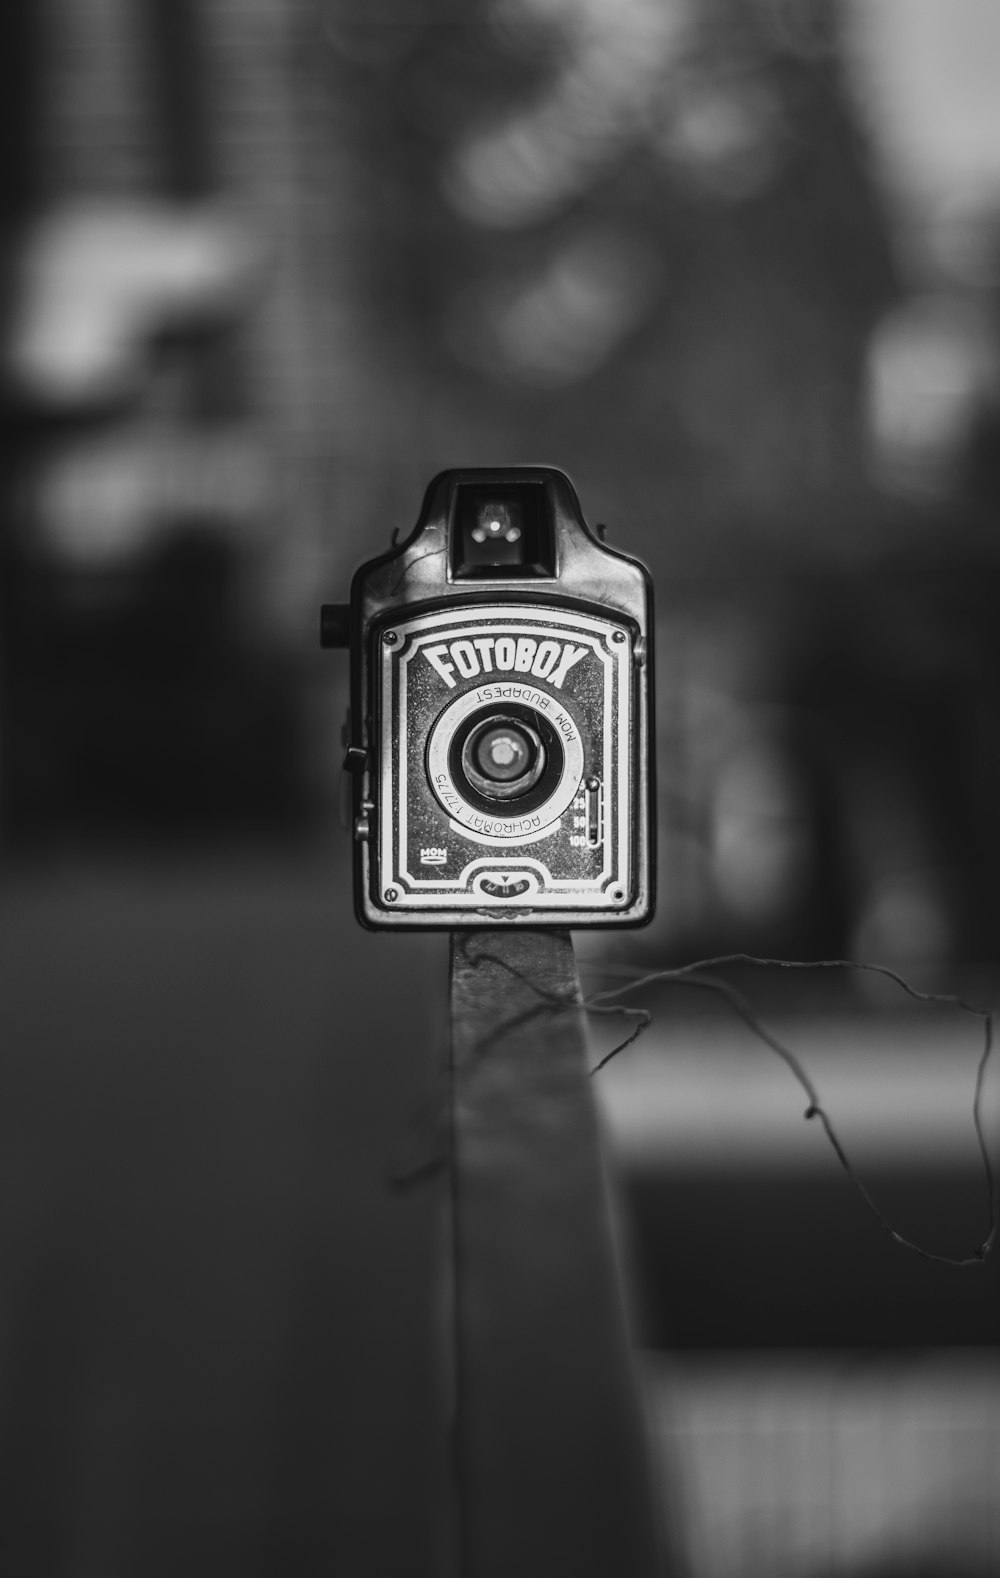 Grayscale Fotobox camera photo – Free Grey Image on Unsplash